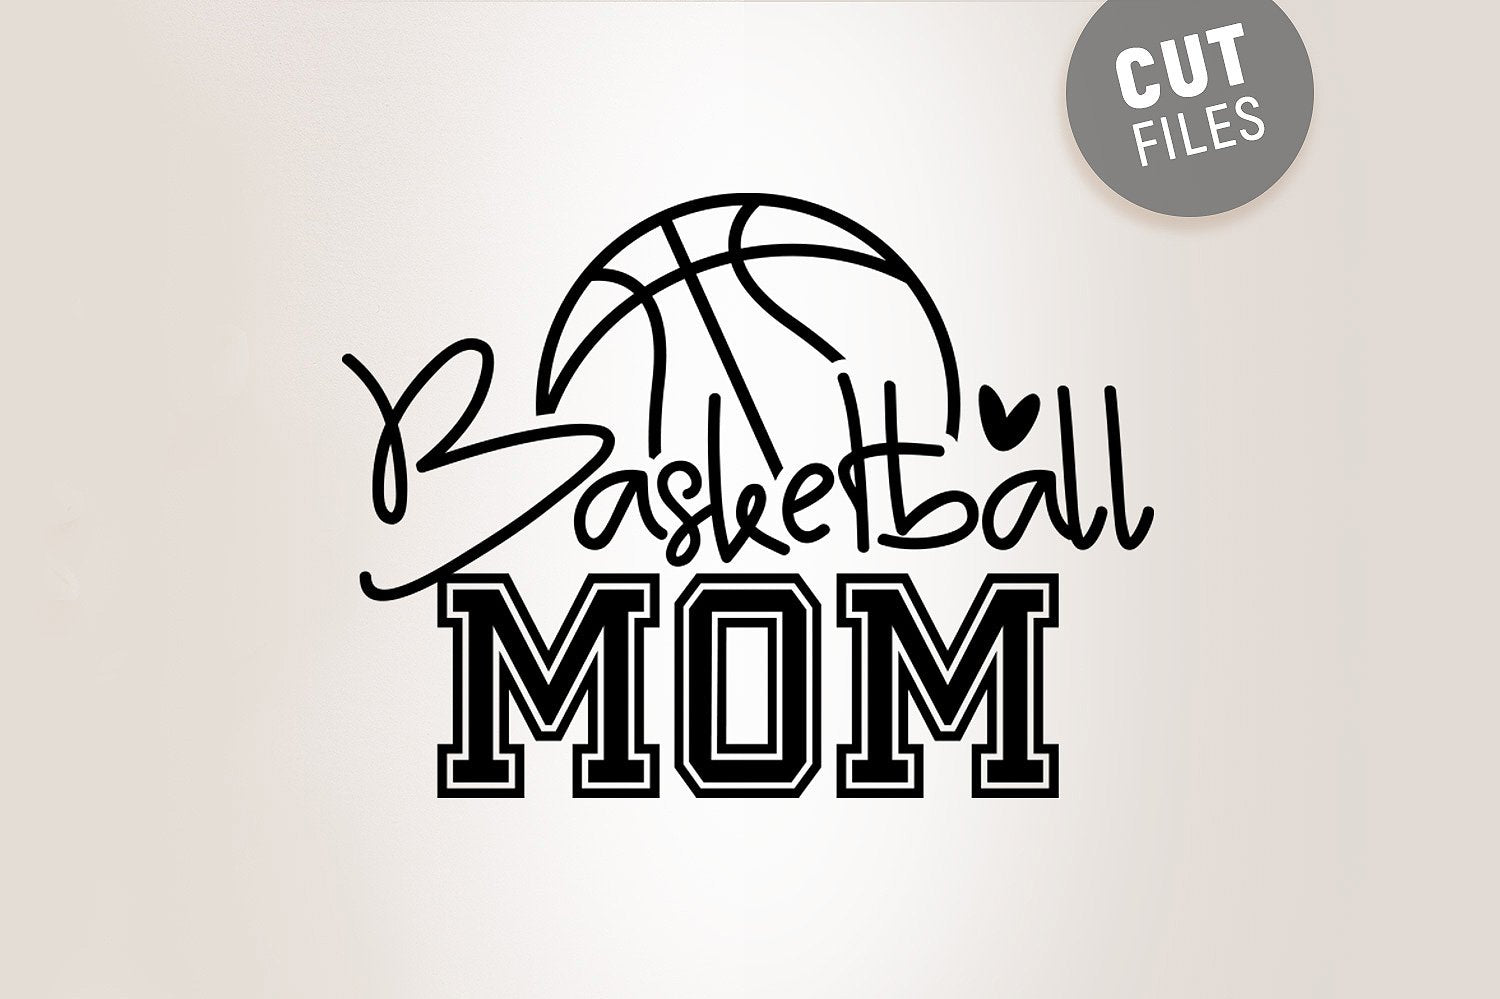 FREE Mom SVG | Basketball Mom SVG | Sport Mom SVG